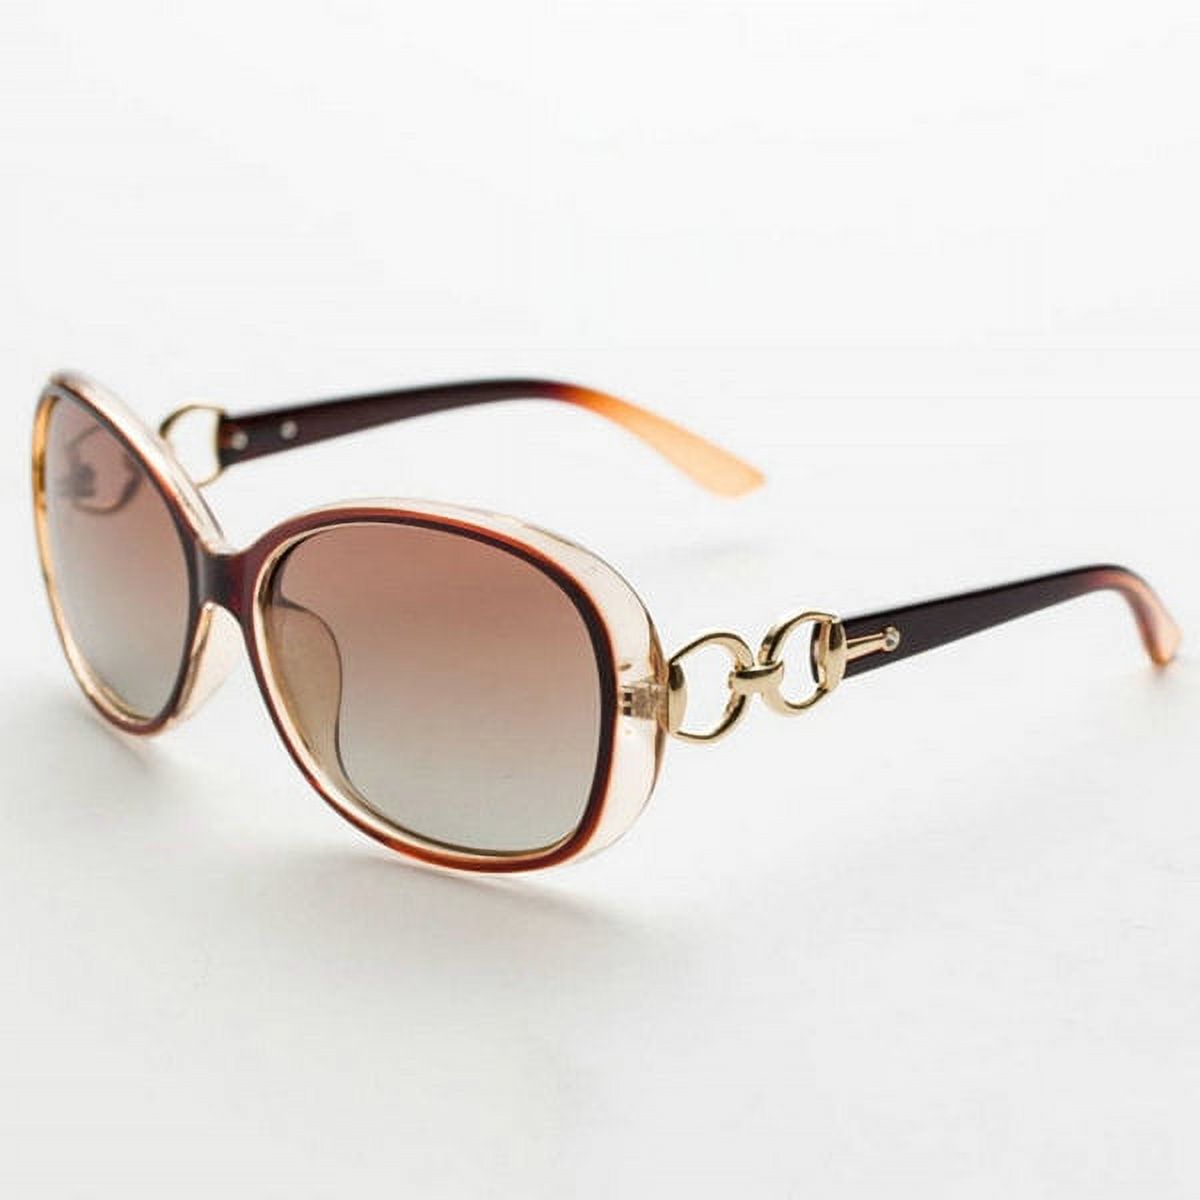 Womens Sunglasses Fashion Sun Glasses UV Protection Sunglasses - image 3 of 5